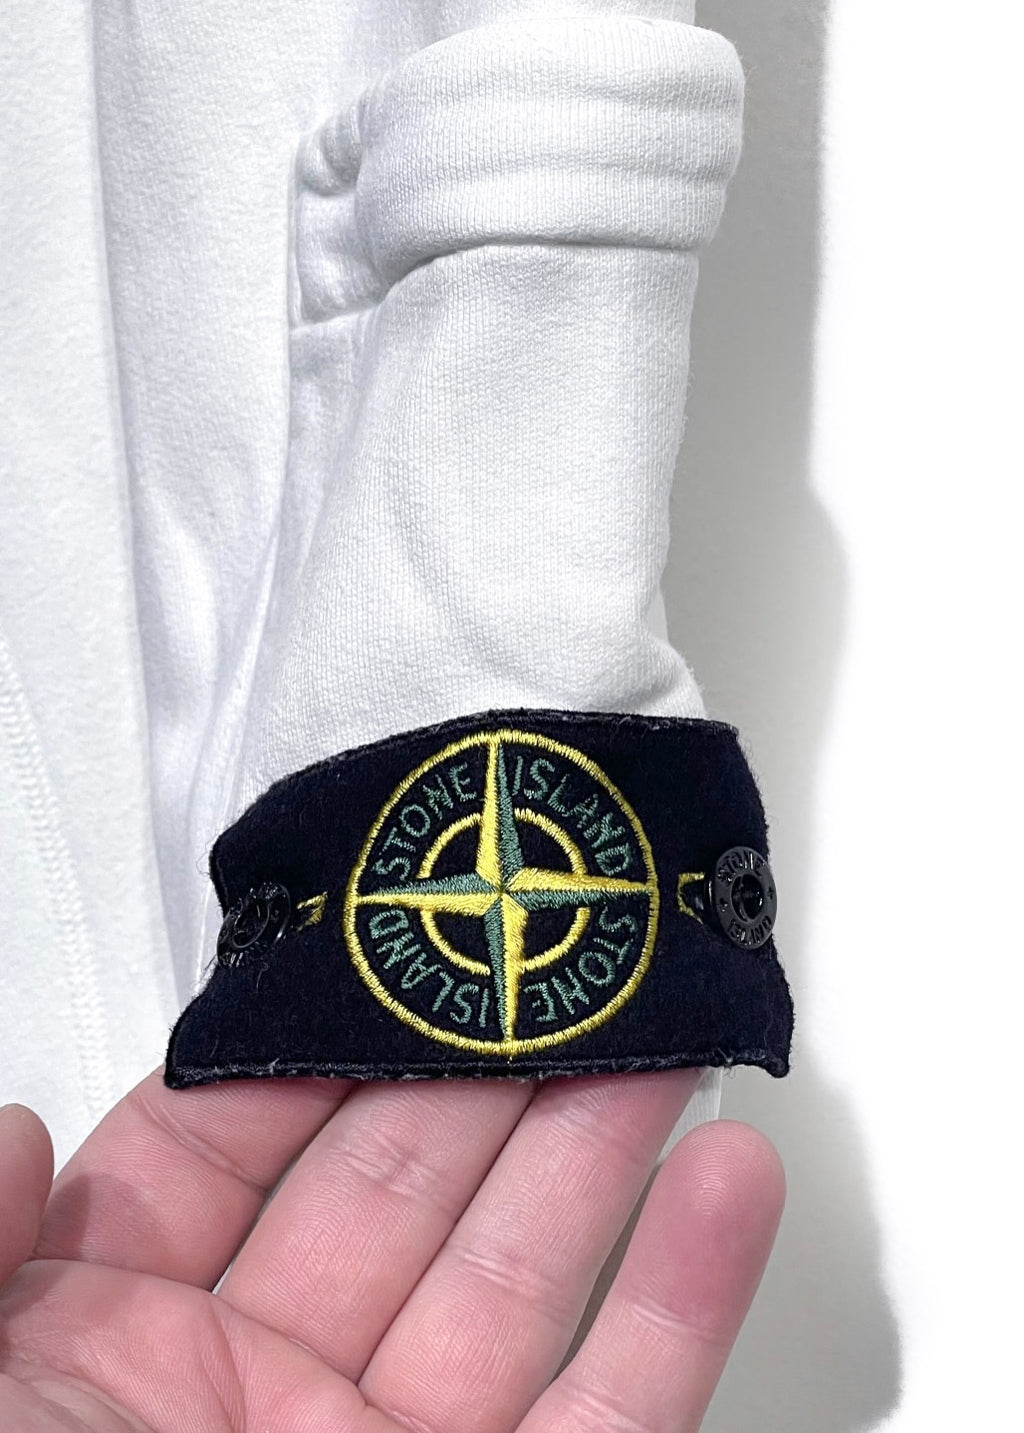 Stone Island Badge White Logo Sweatpants